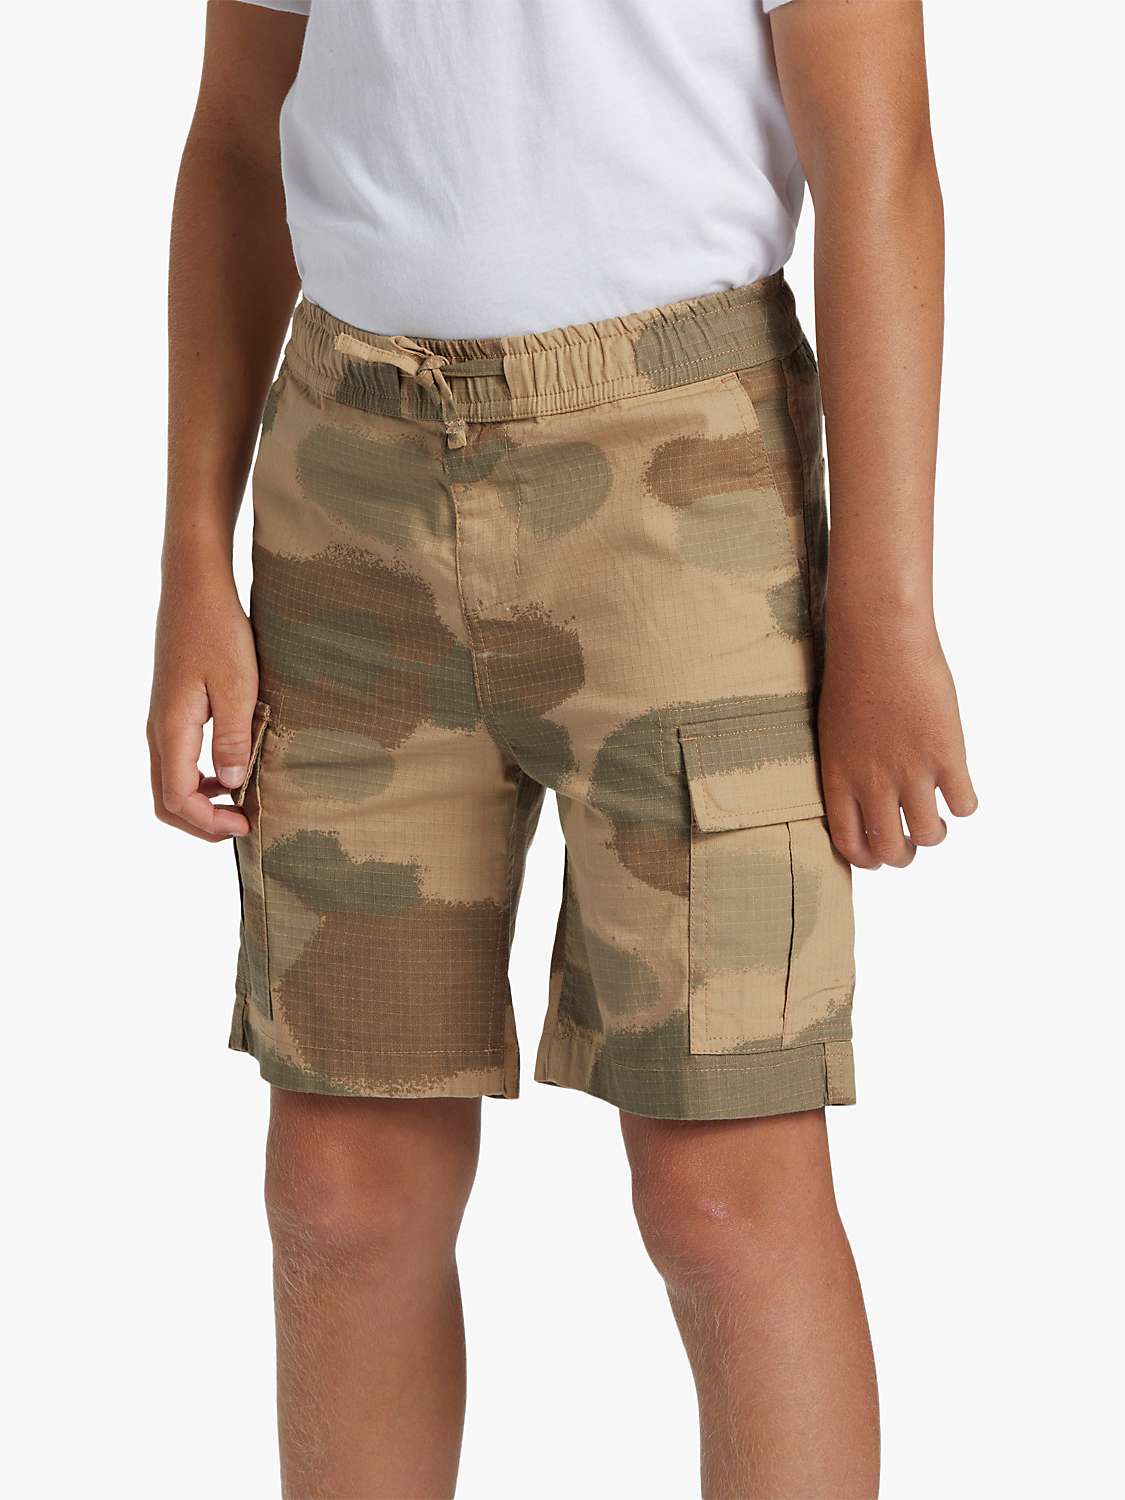 Buy Quicksilver Kids' Oganic Cotton Blend Taxer Cargo Walk Shorts, Camo Online at johnlewis.com